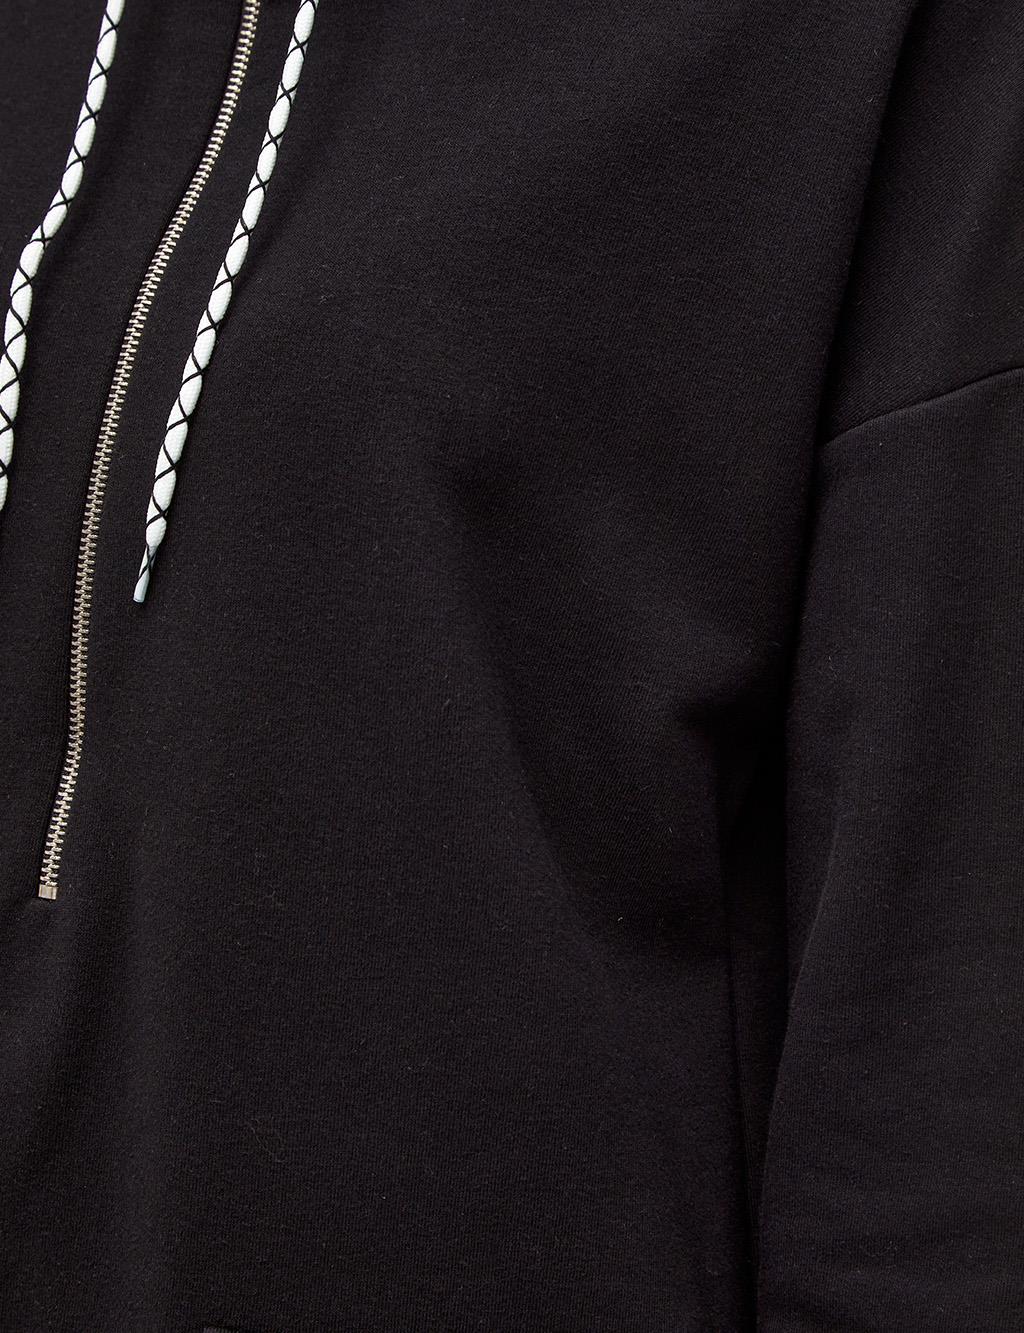 Half Zipper Grandad Collar Sweatshirt Black